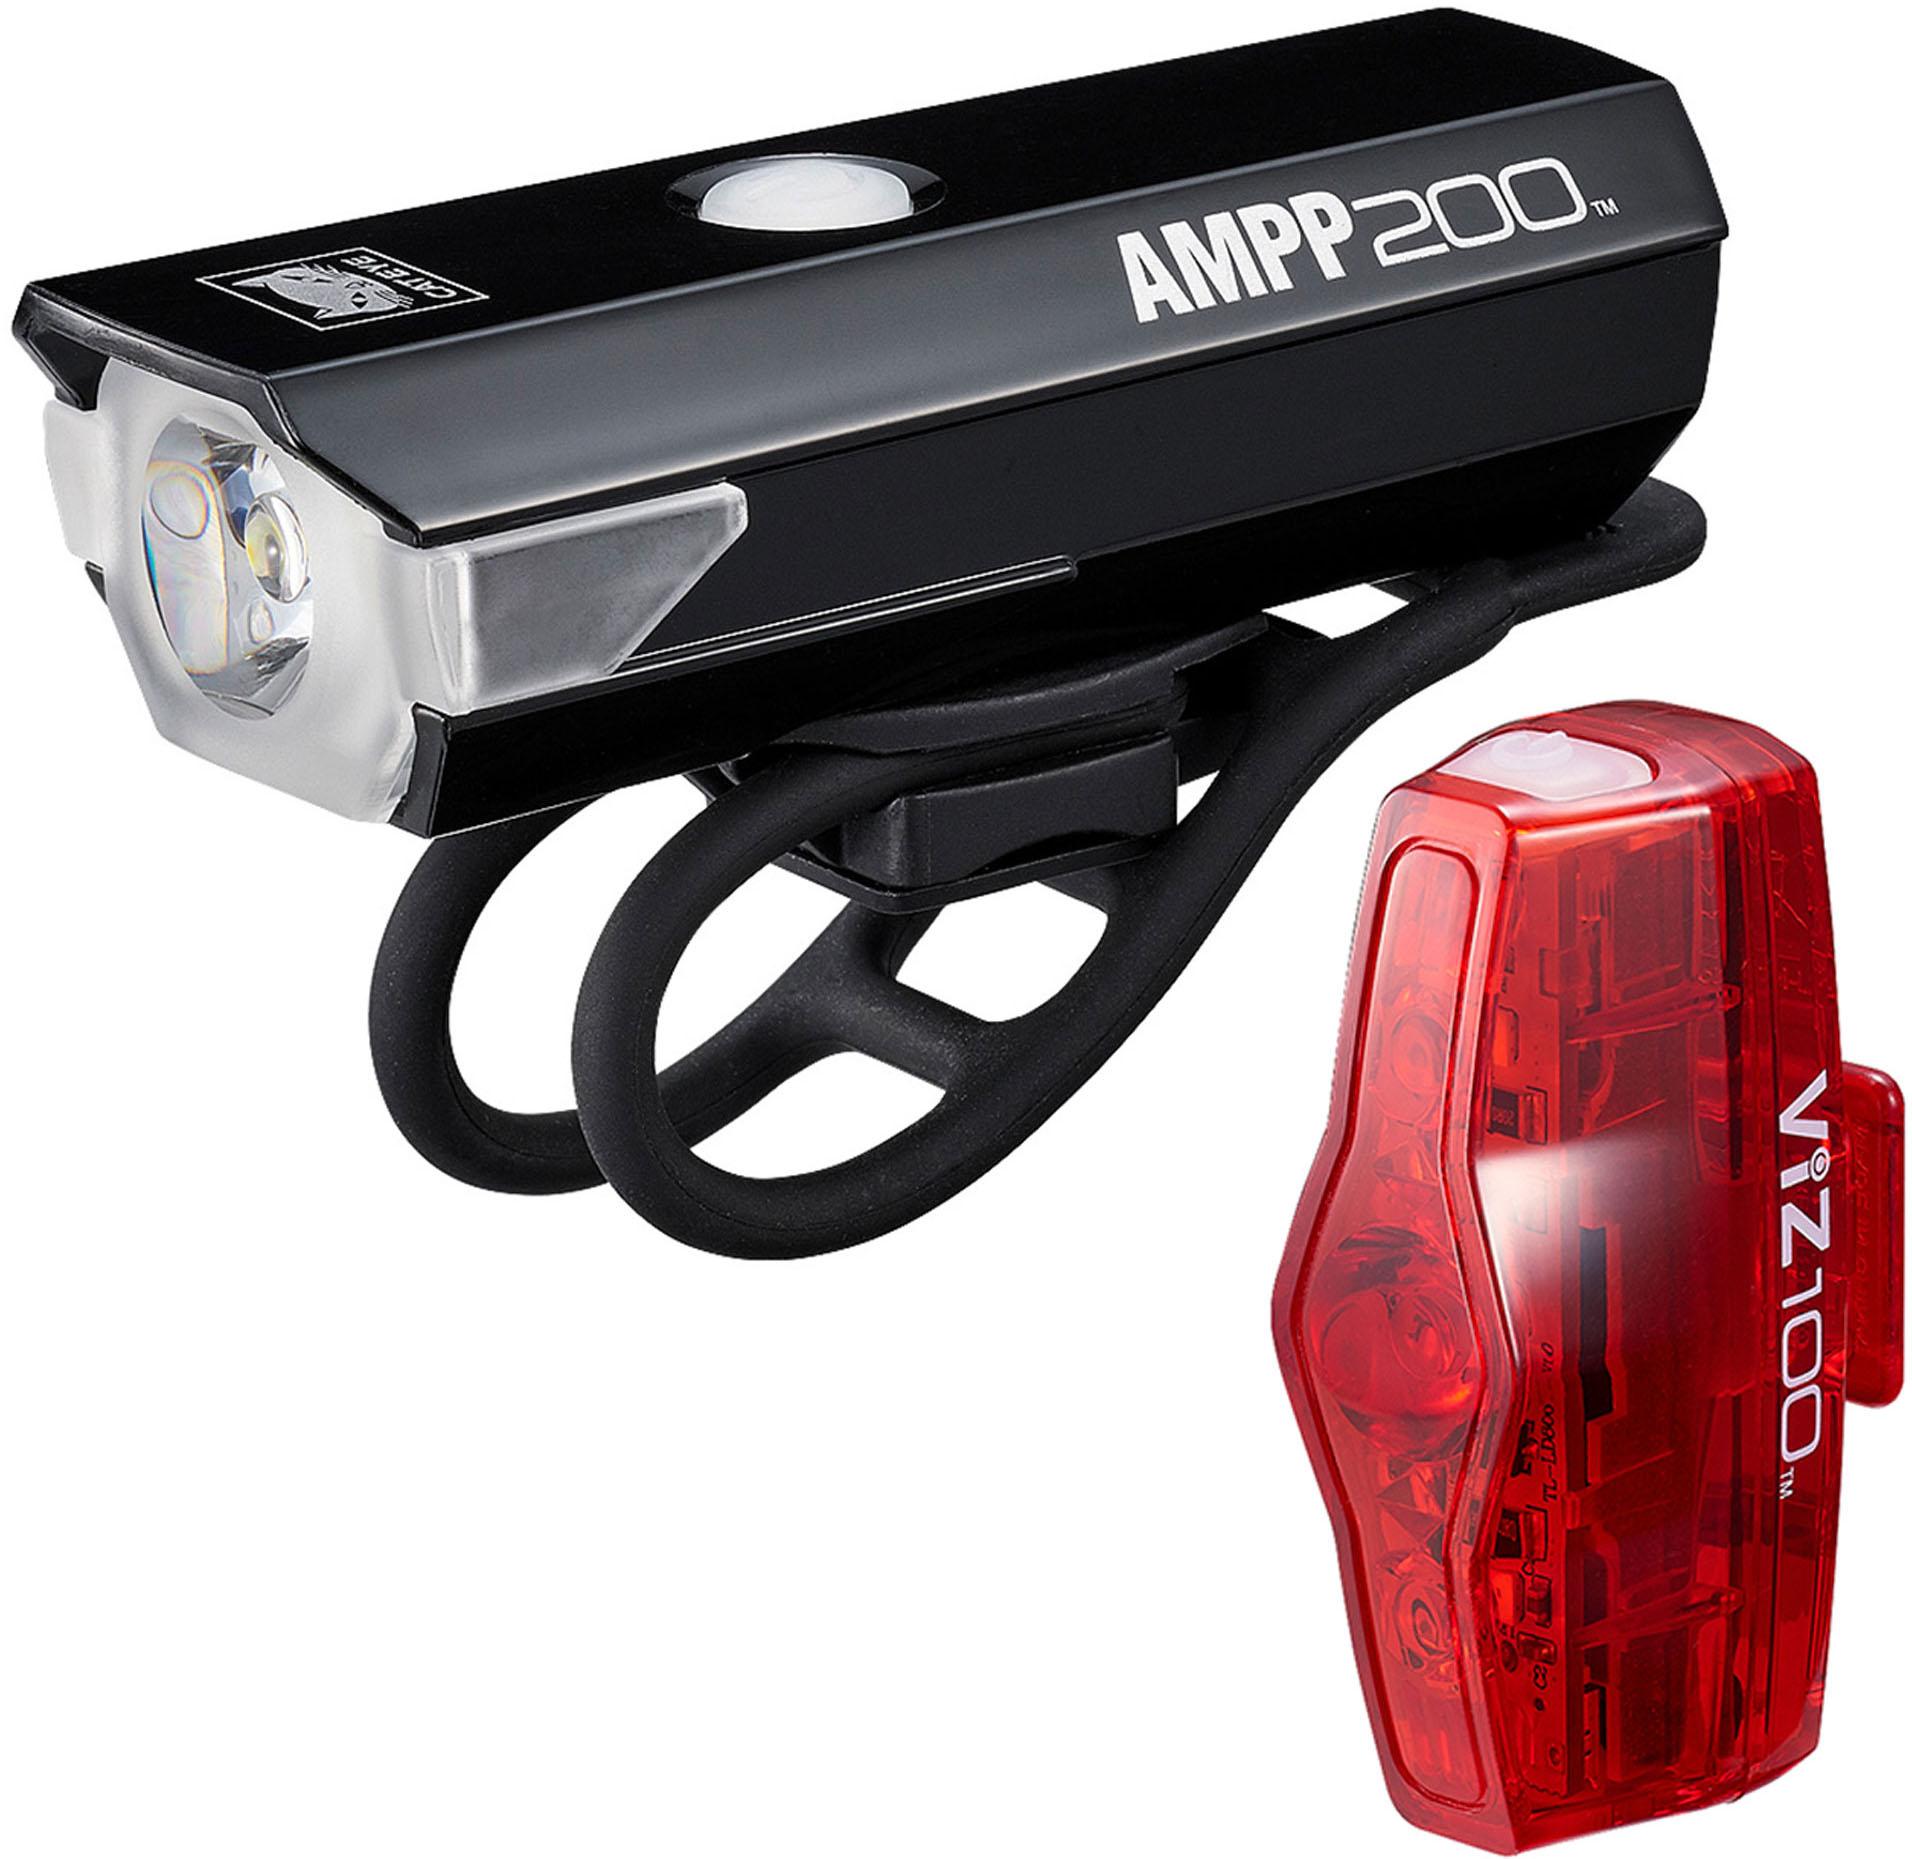 Cateye Ampp 200 And Viz 100 Light Set  Black/red